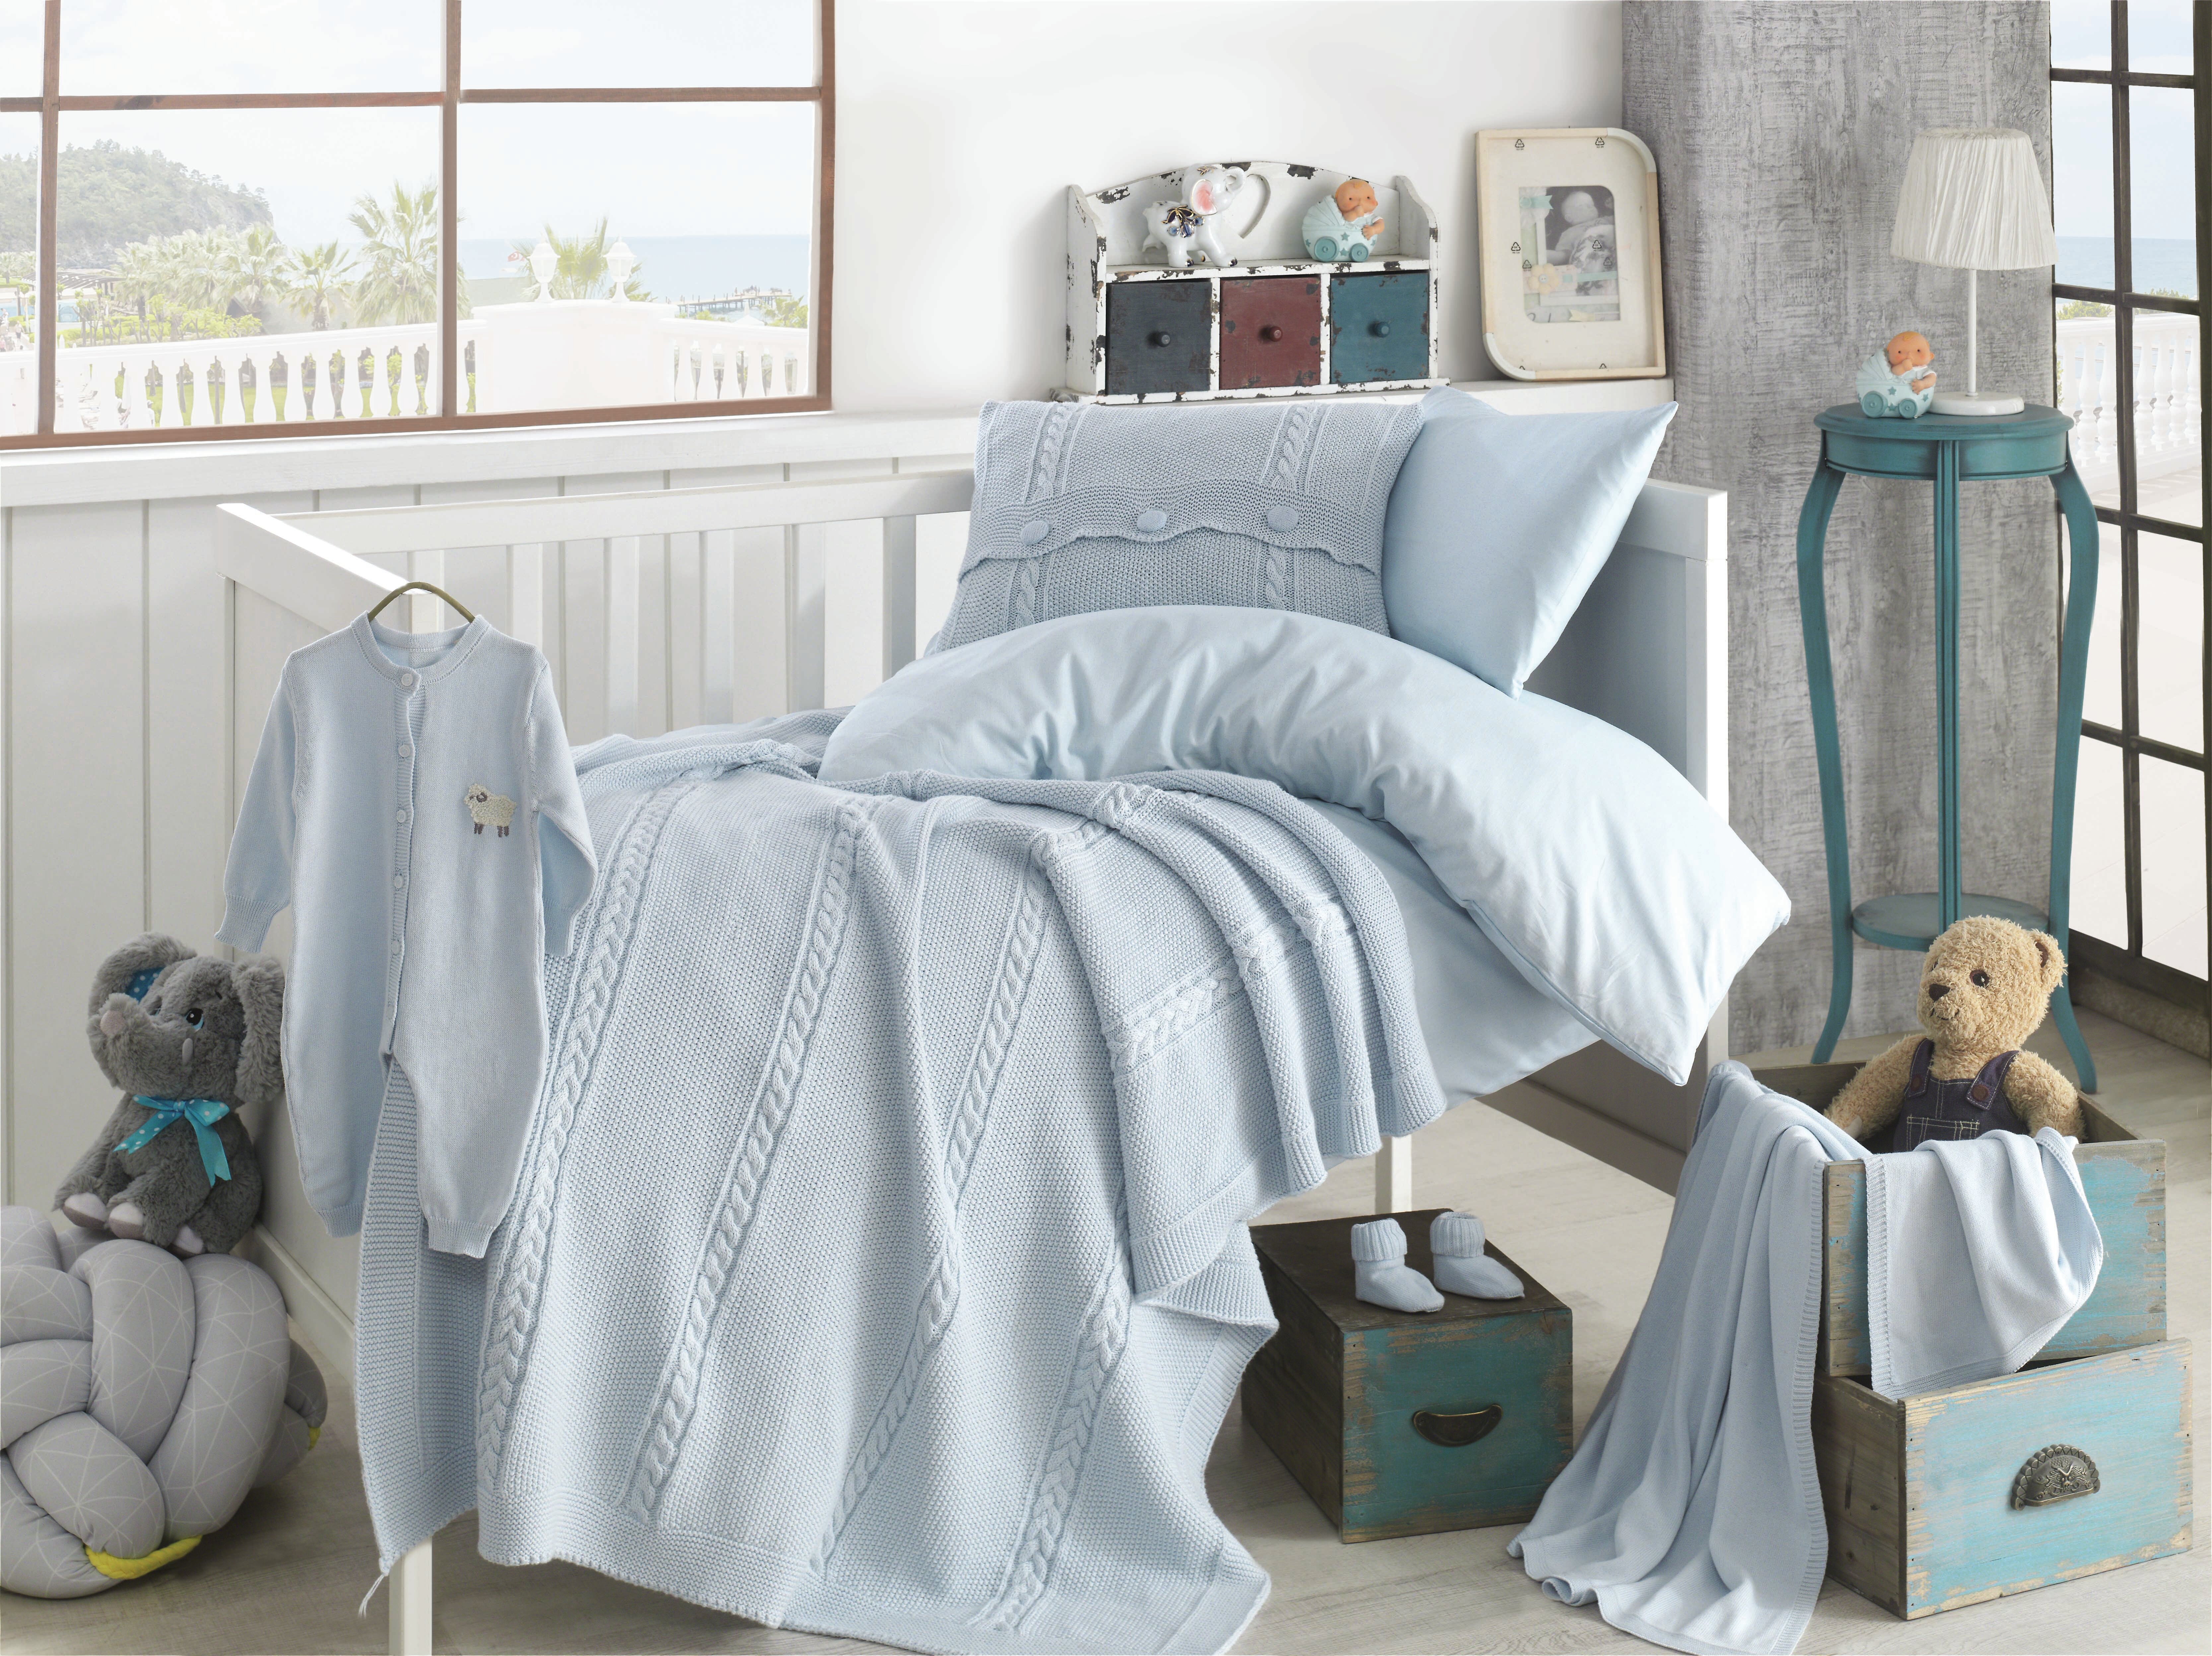 Blue Crib Bedding Sets Free Shipping Over 35 Wayfair